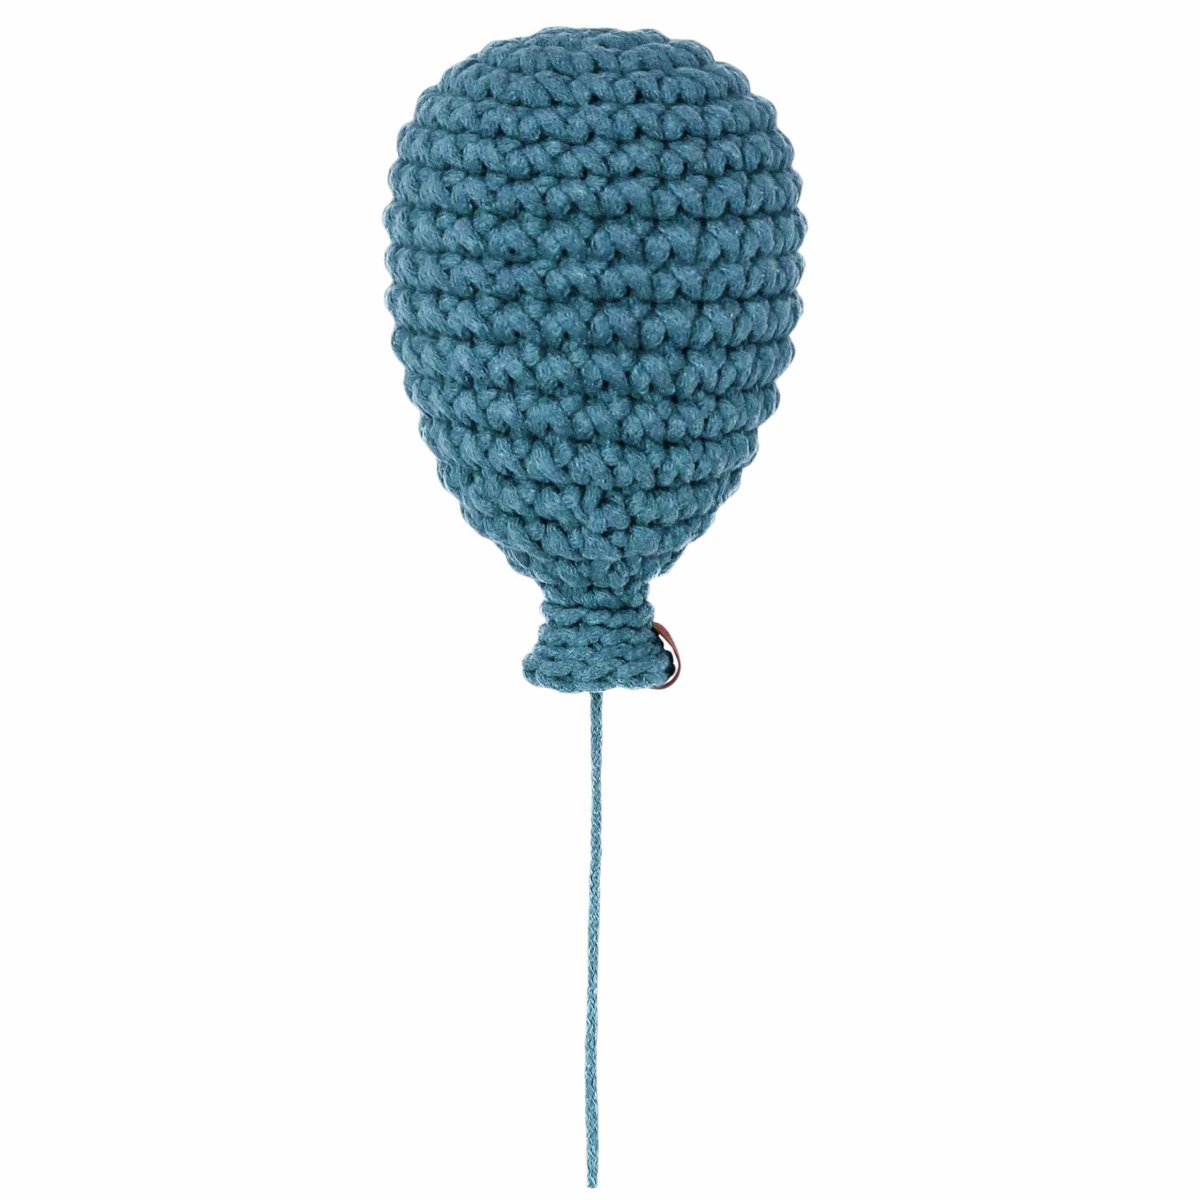 Crochet balloon | PETROL - Zuri House